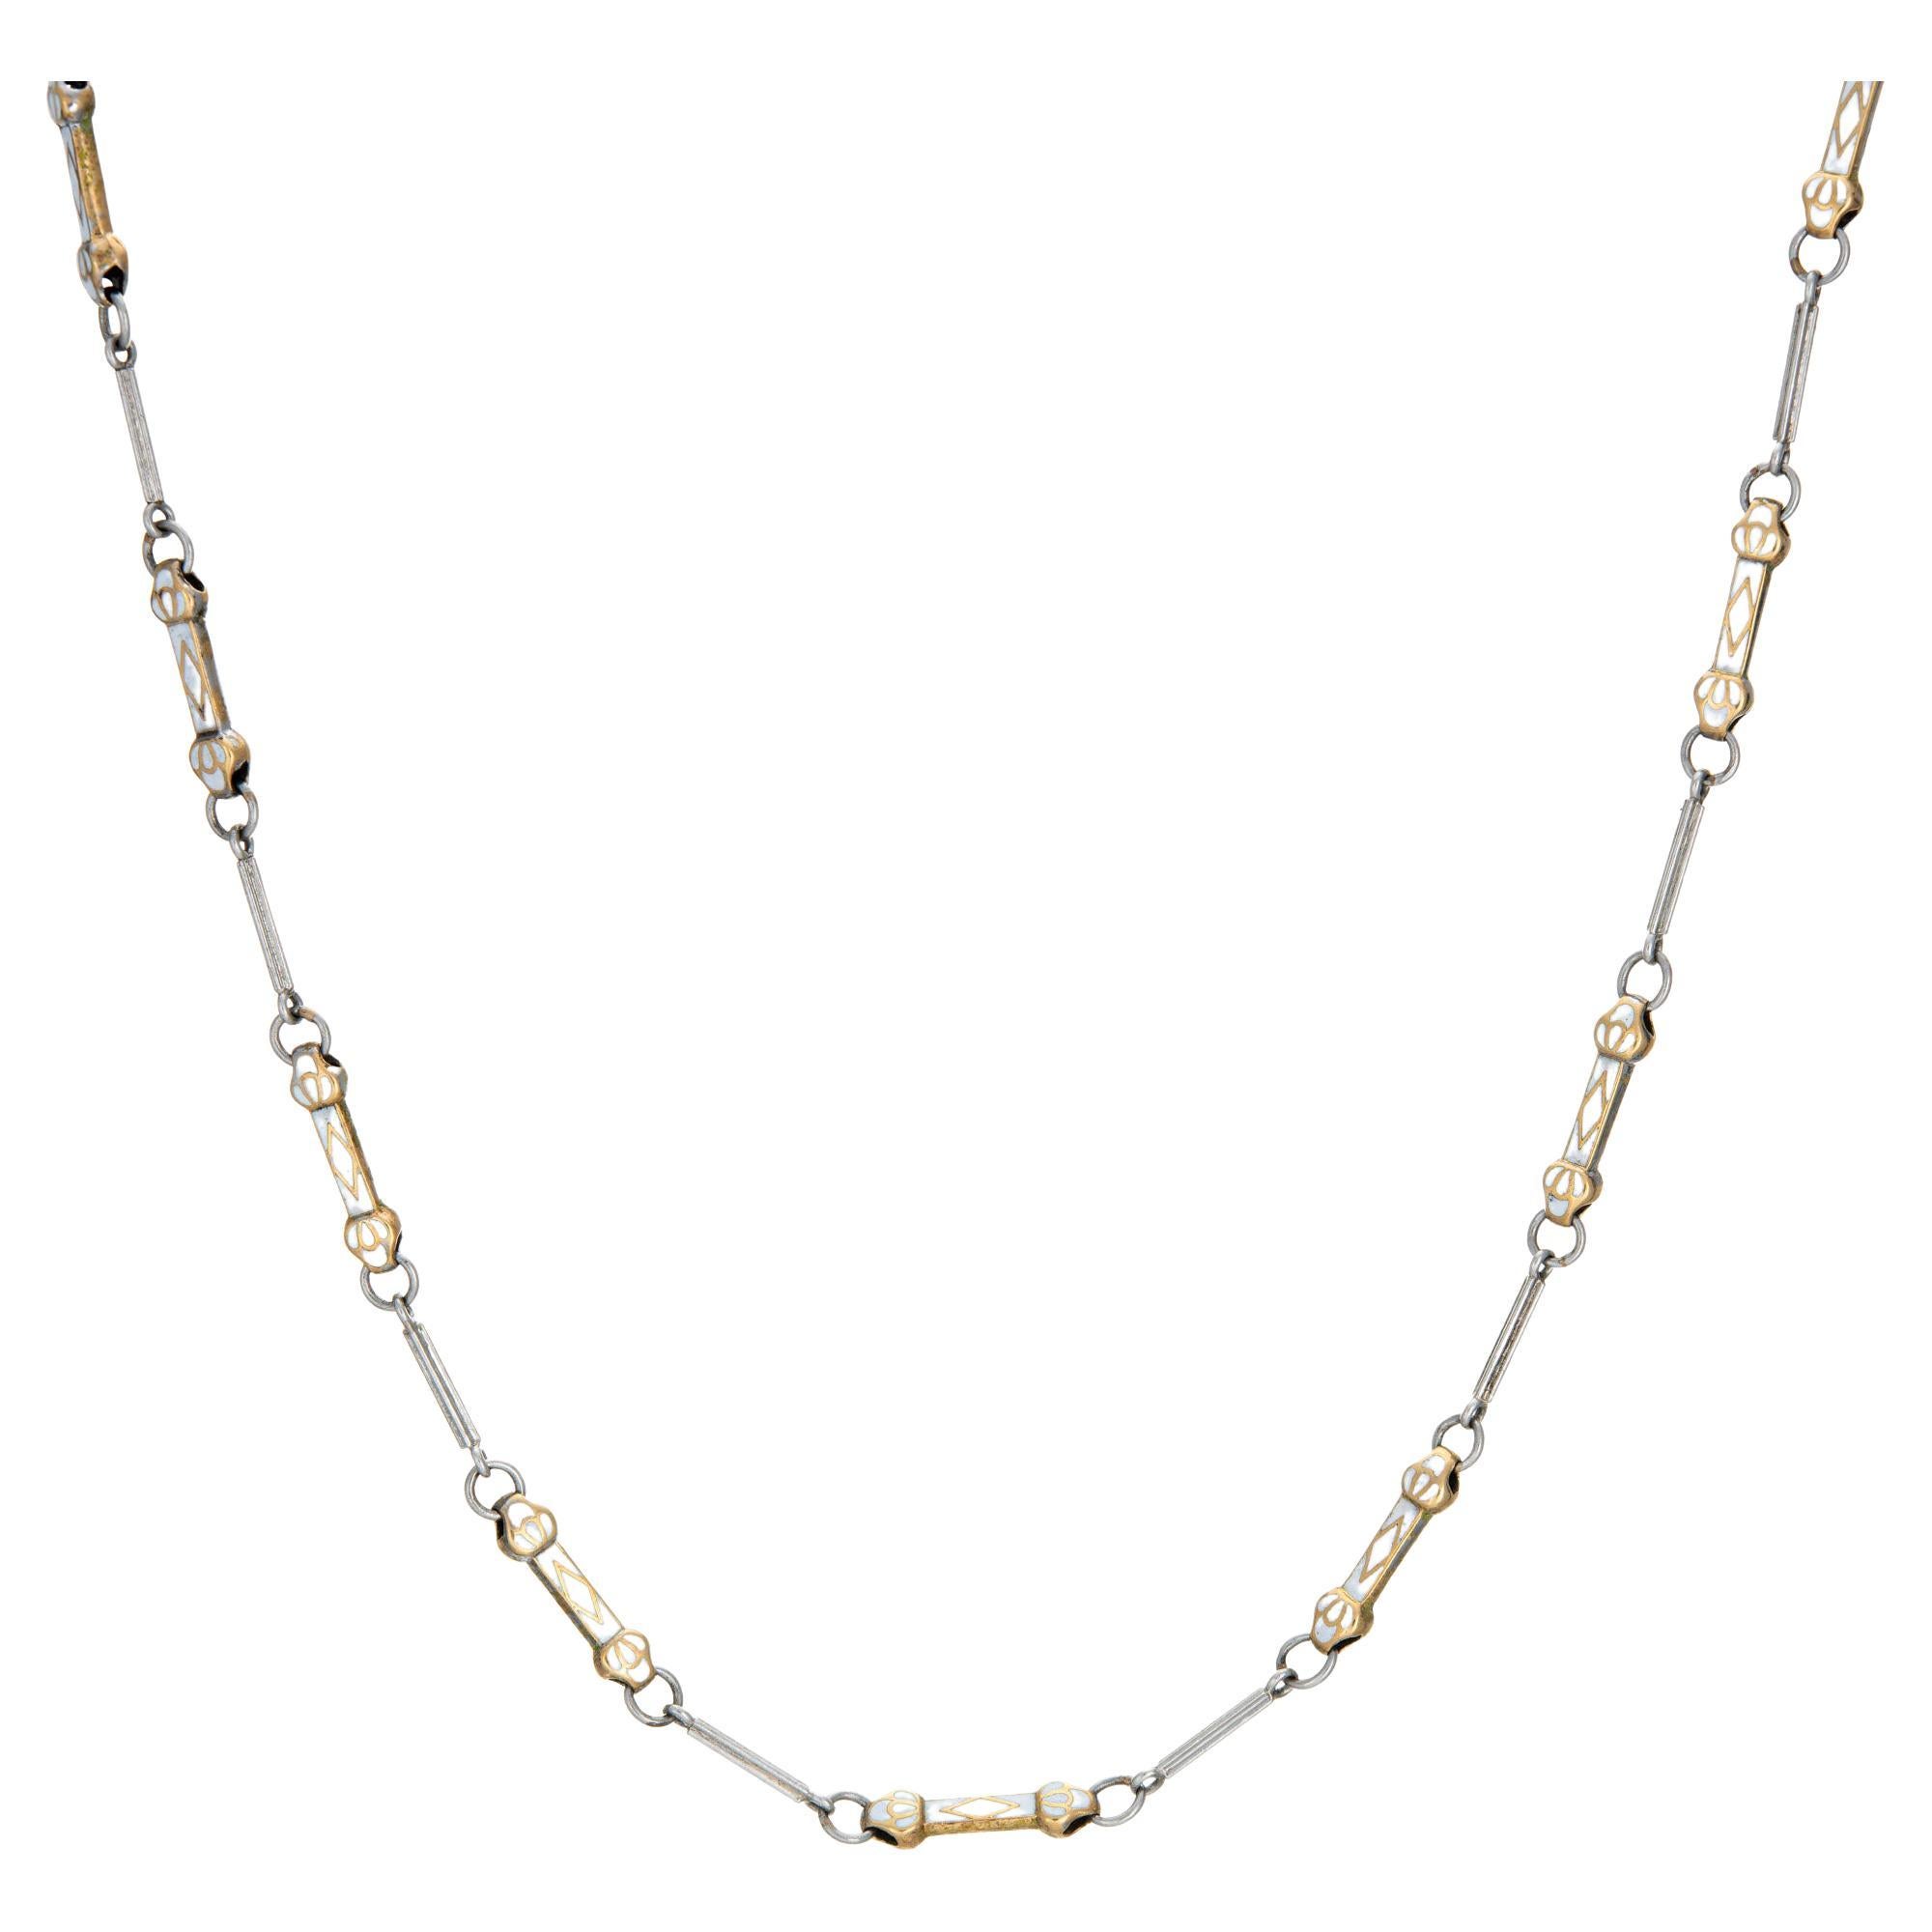 Vintage Art Deco White Enamel Necklace Platinum Fob Chain Jewelry